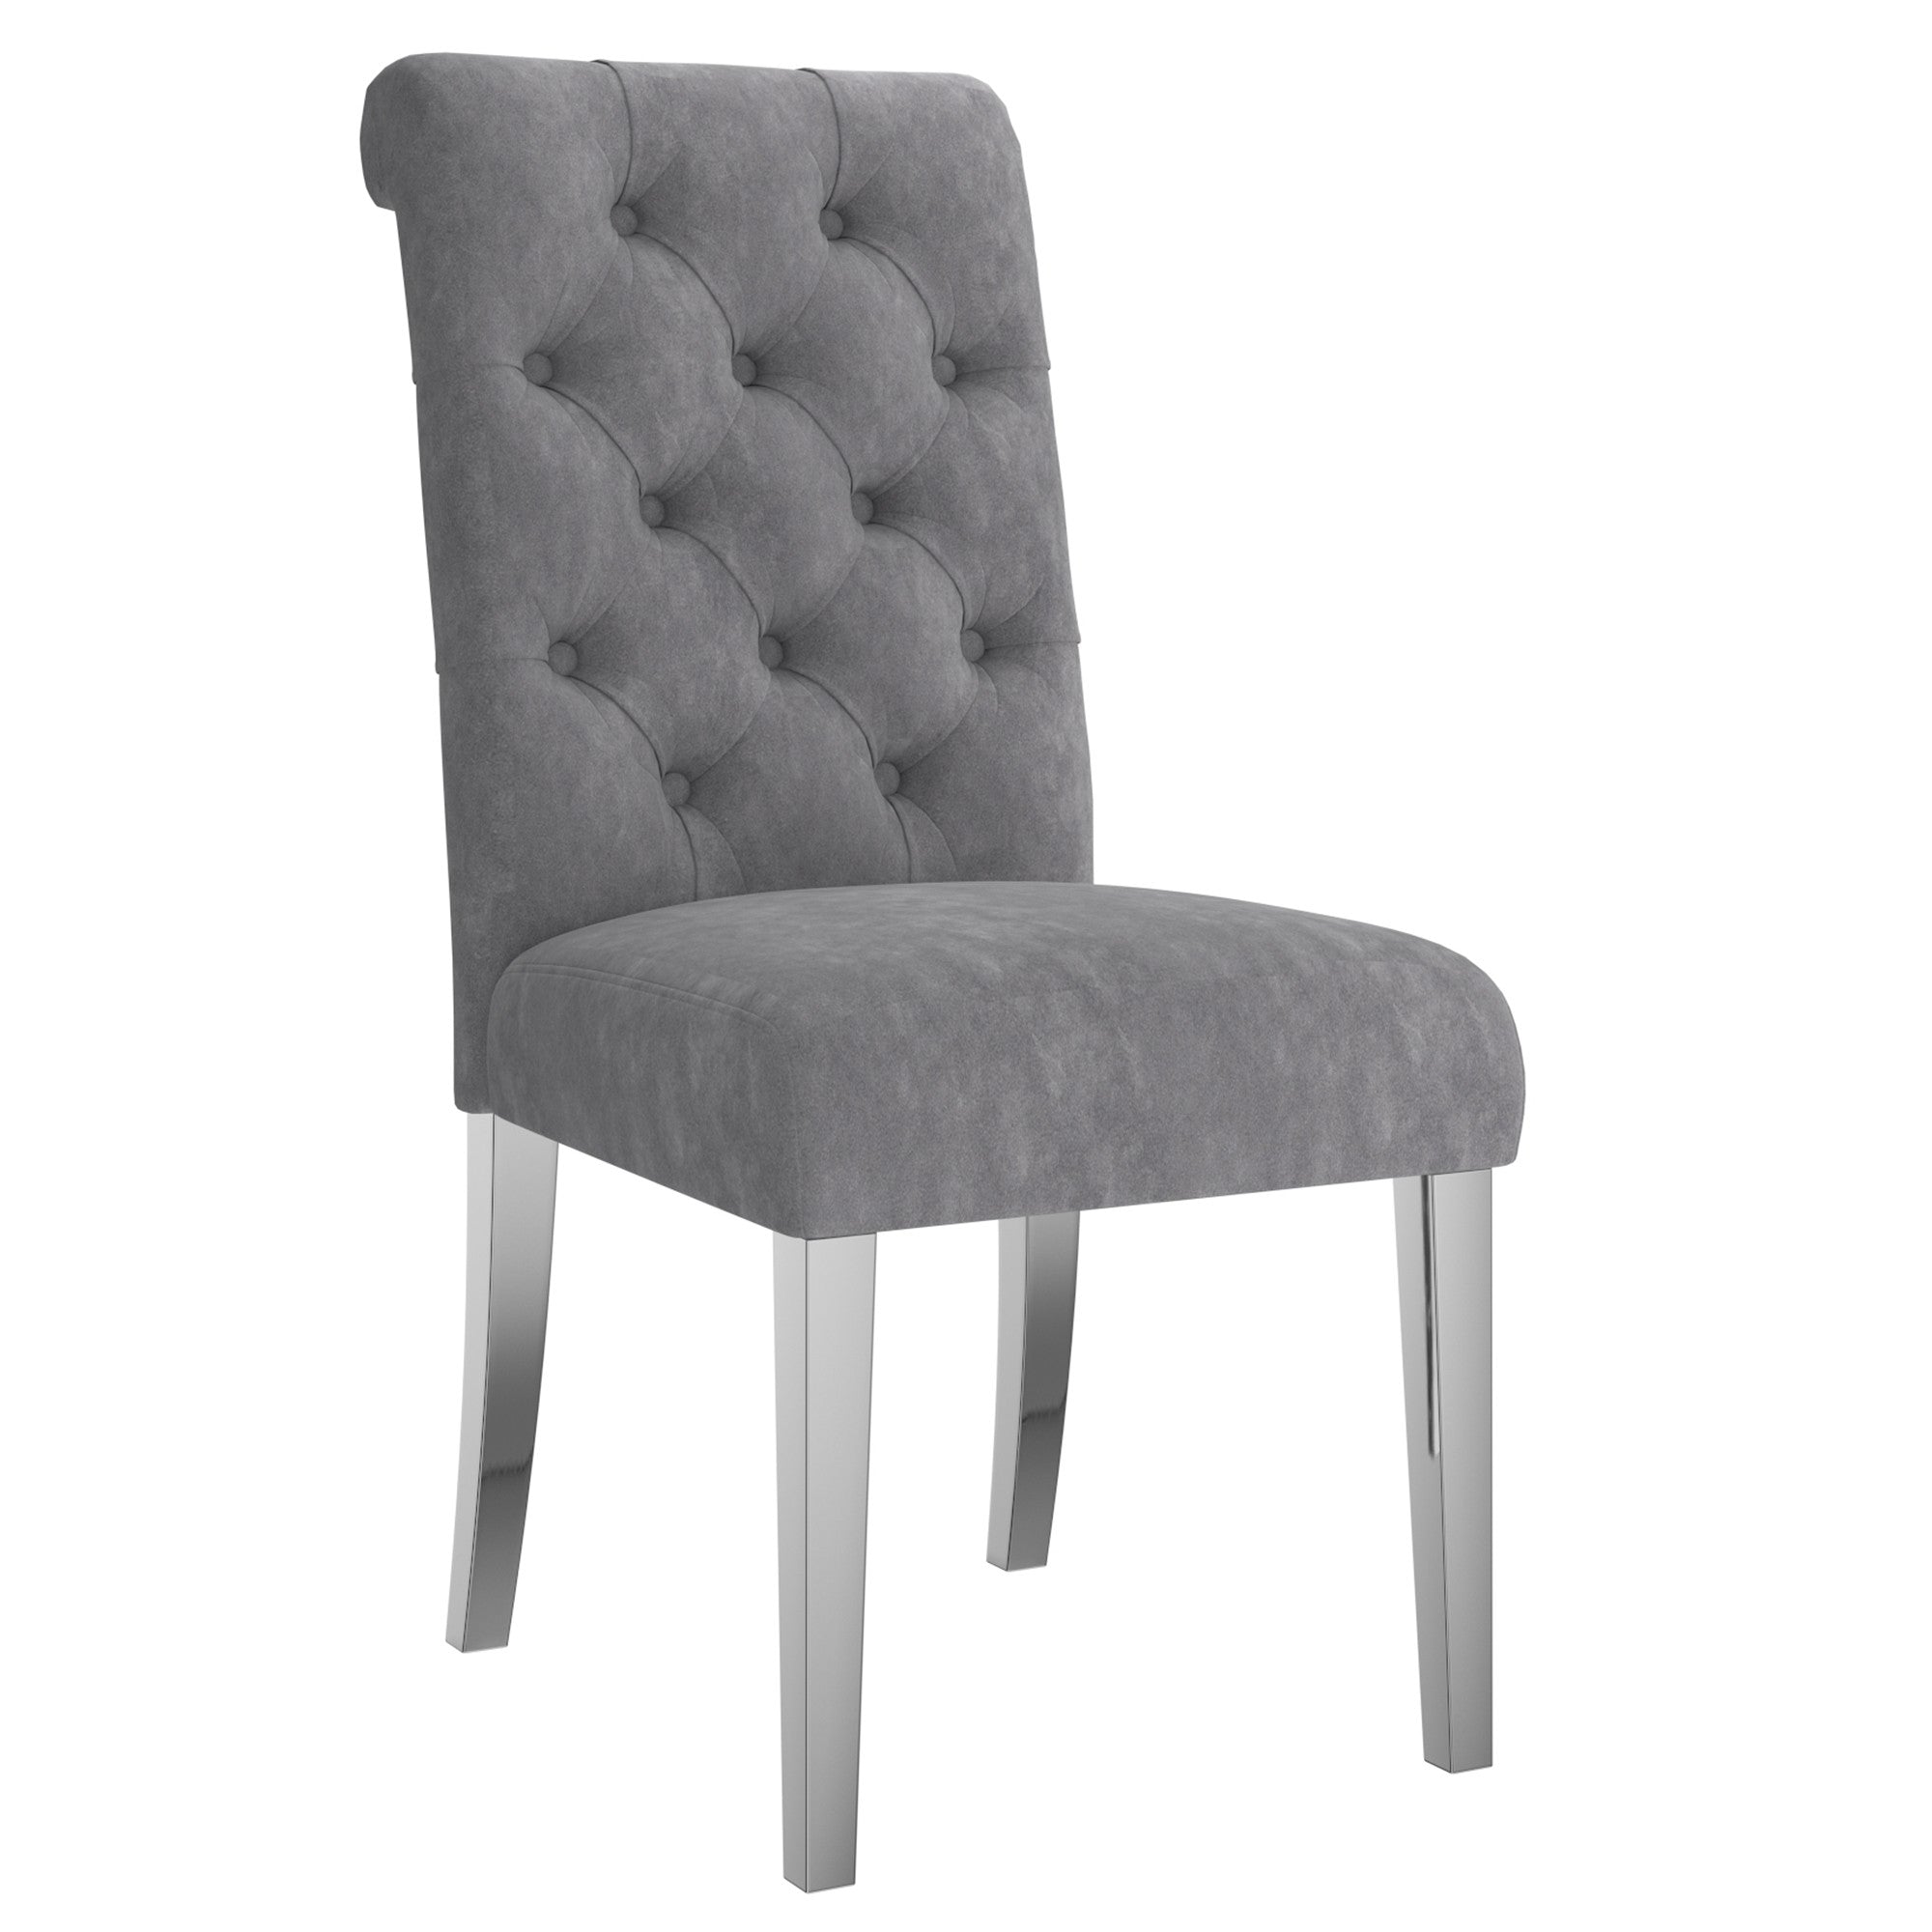 Chloe Side Chair in Grey, Set of 2 by Worldwide Homefurnishings Inc